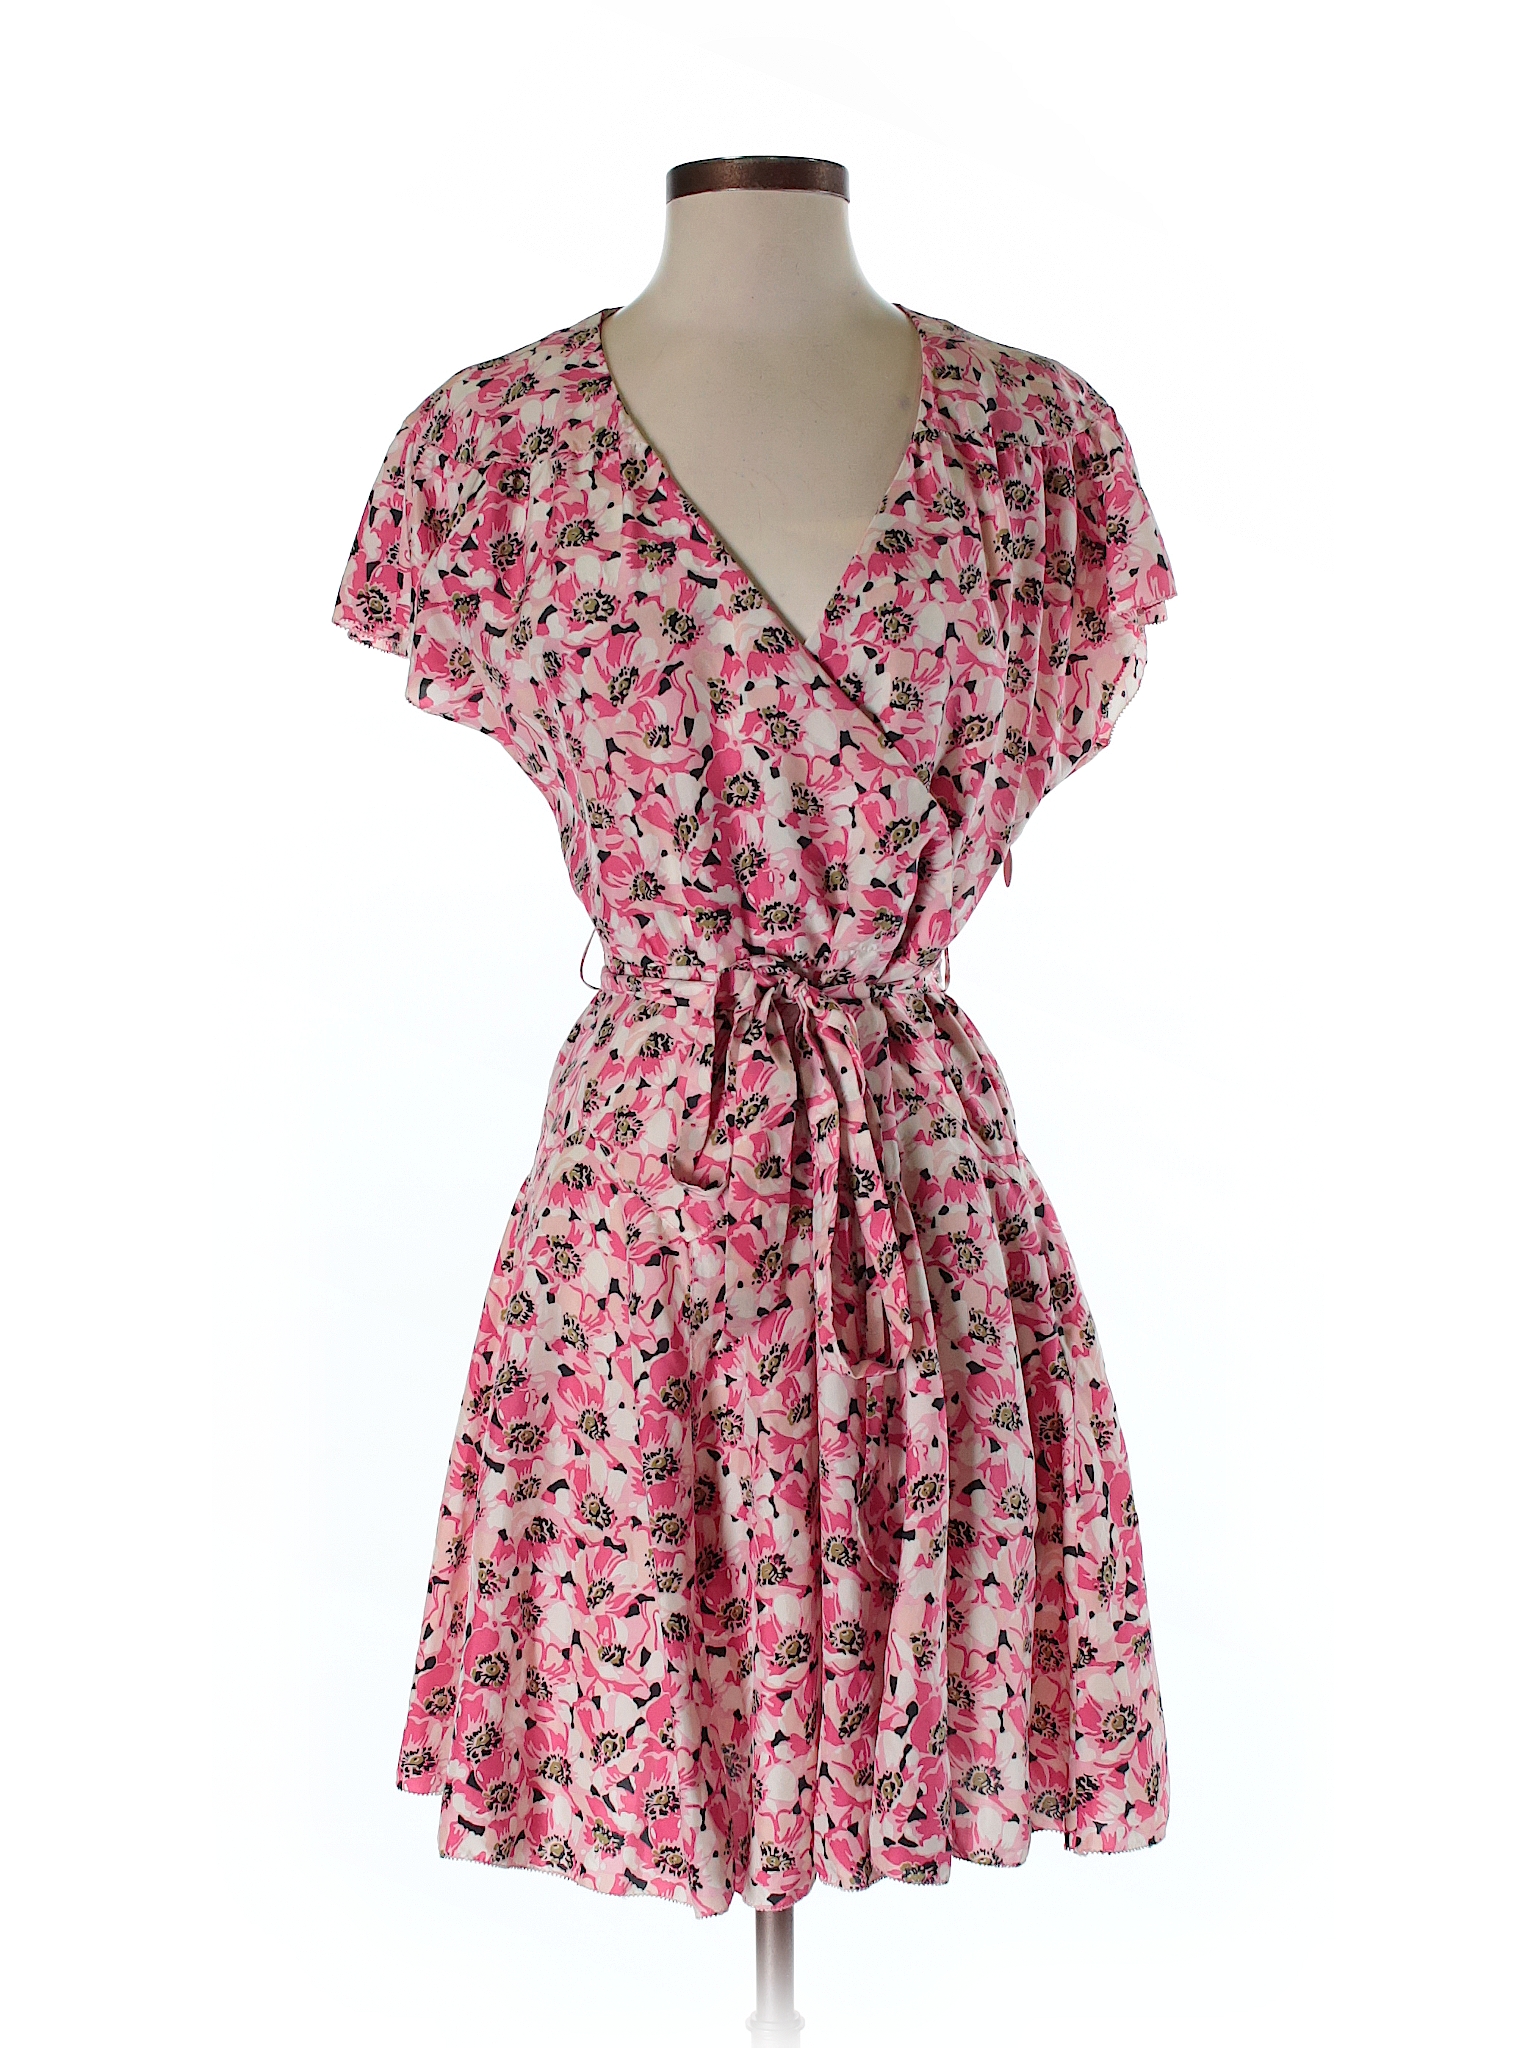 Juicy Couture 100% Silk Floral Pink Silk Dress Size 2 - 85% off | thredUP